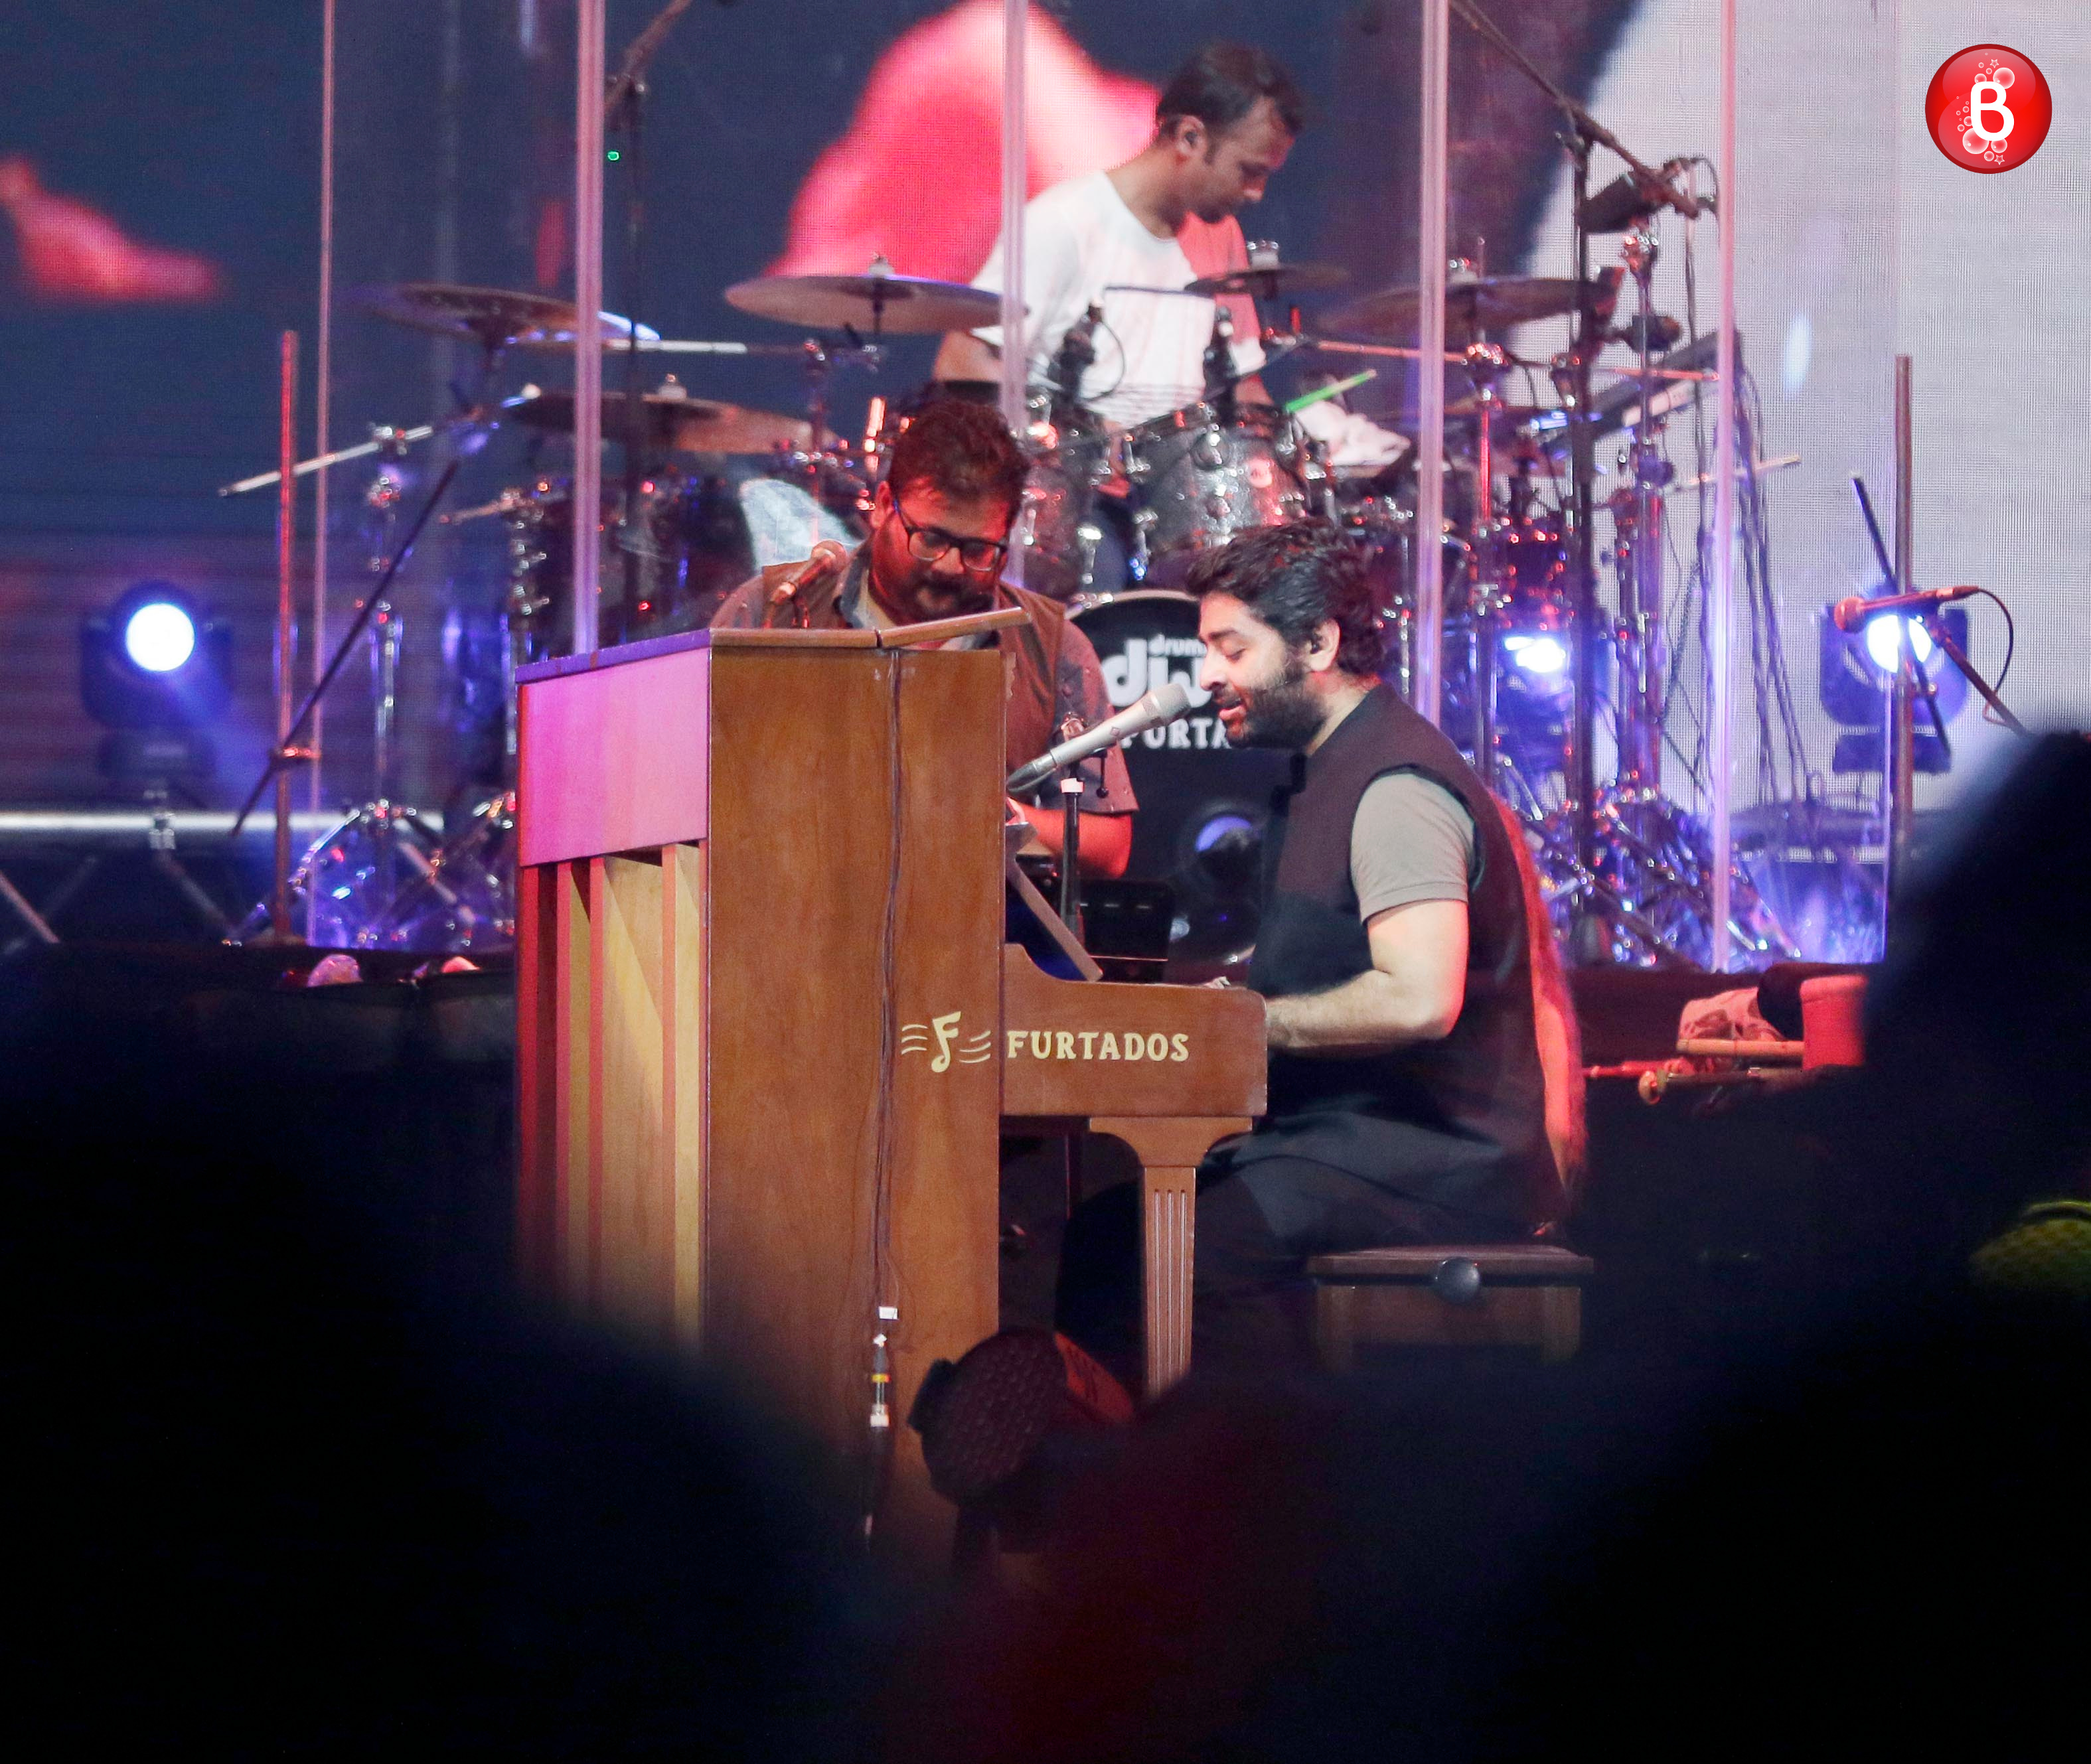 Arijit Singh at the Mumbai concert